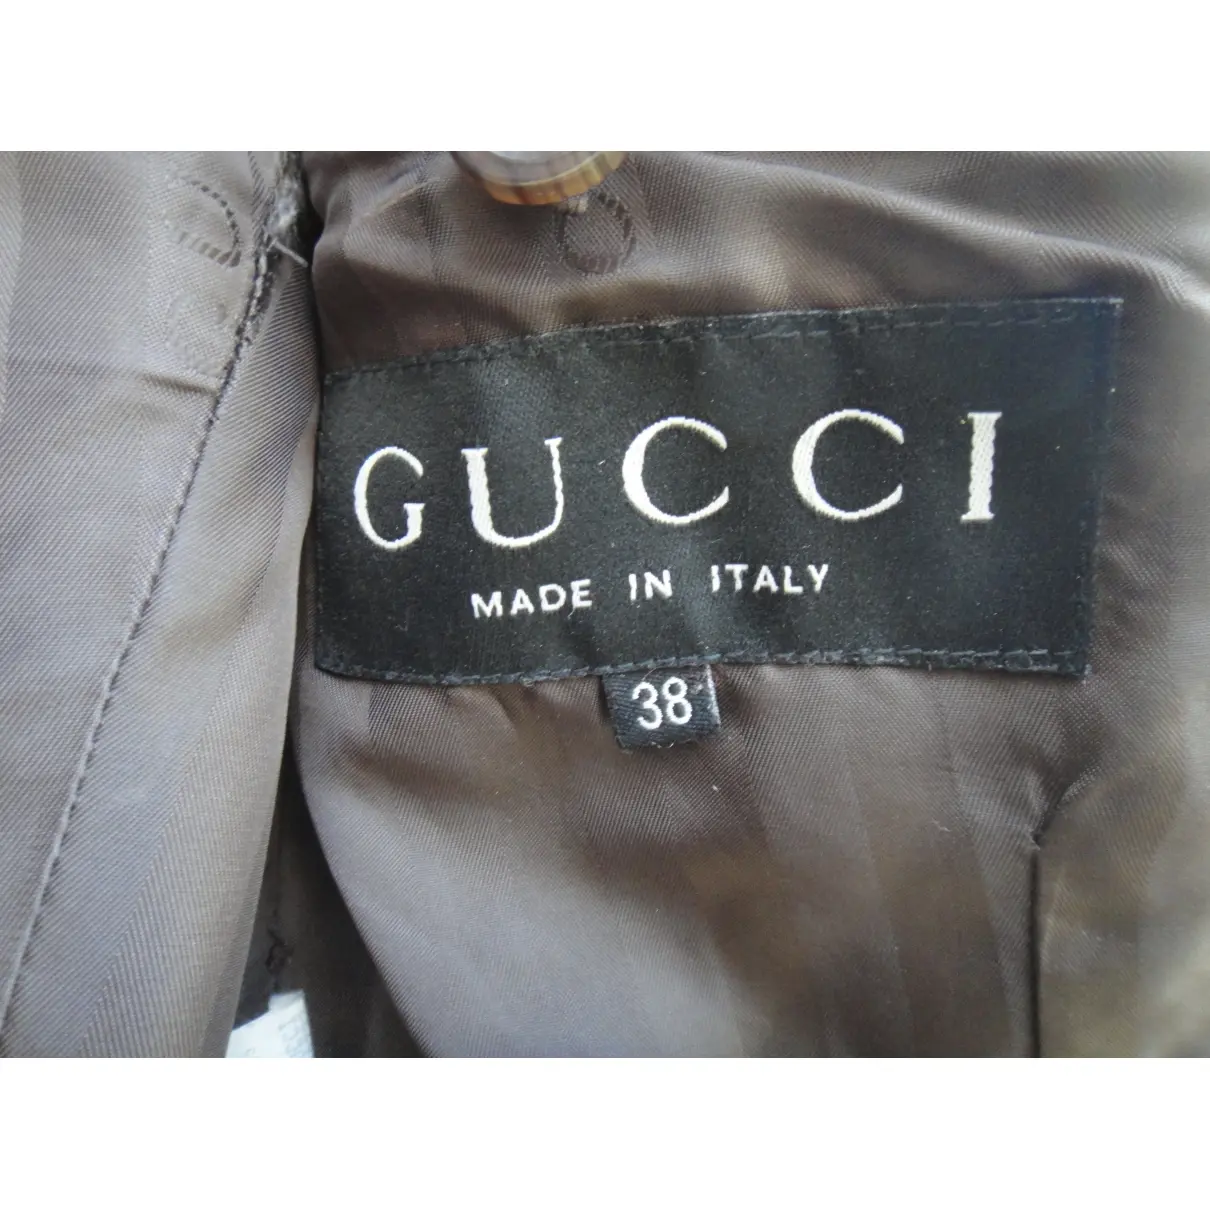 Buy Gucci Leather blazer online